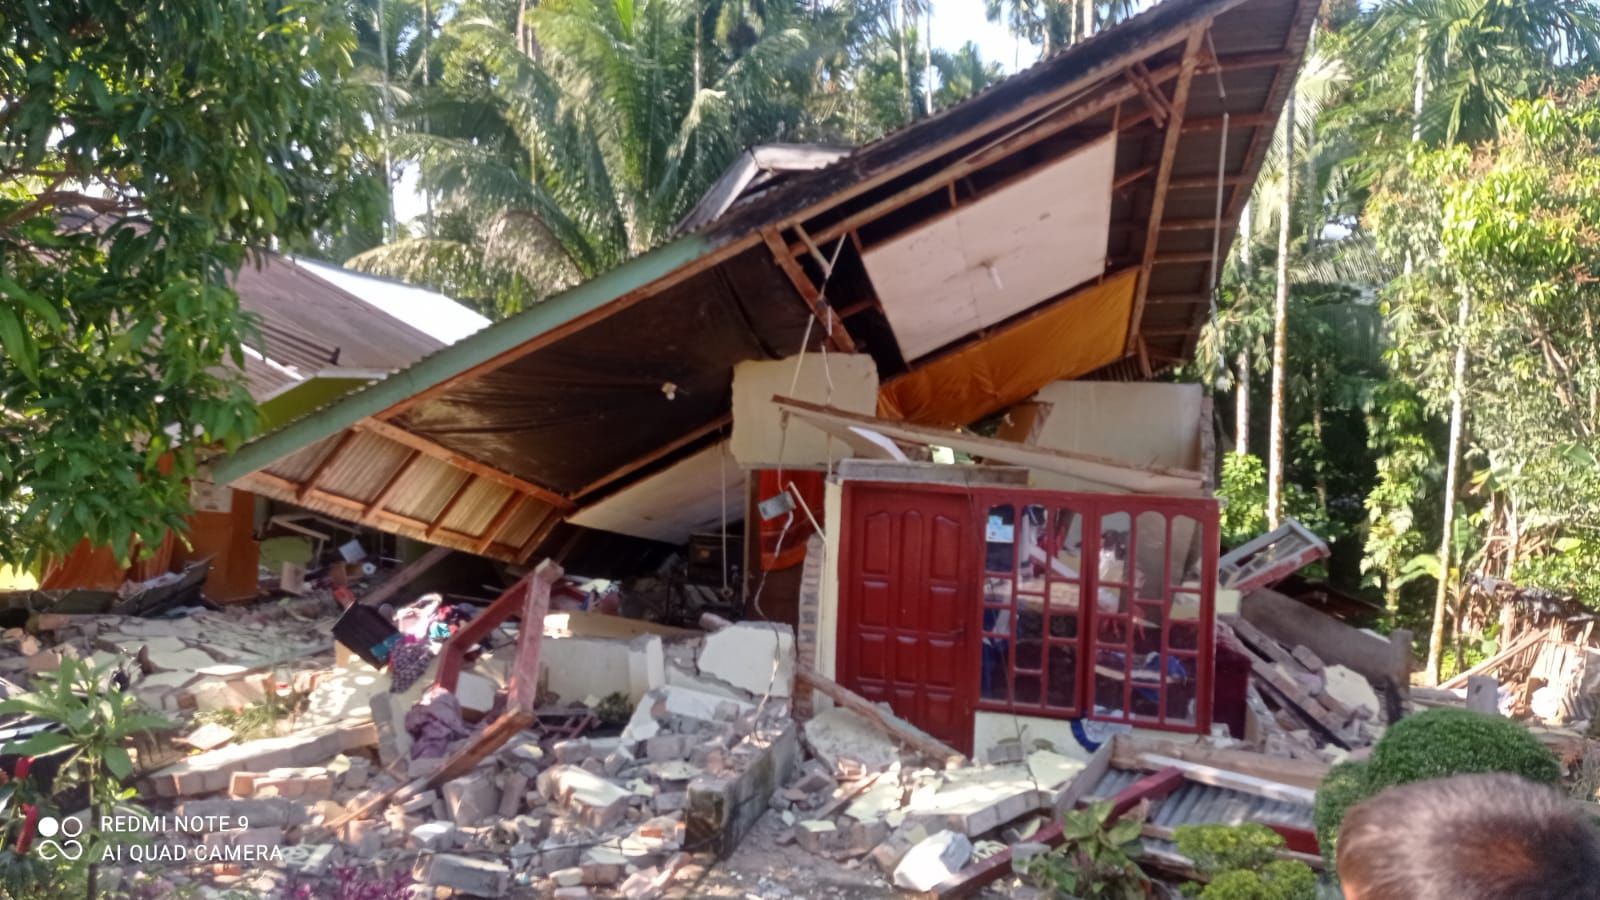 Keadaan Pasaman Barat Terkini Setelah Diterjang Gempa pada 25 Februari 2022, Beberapa Rumah Rusak Parah